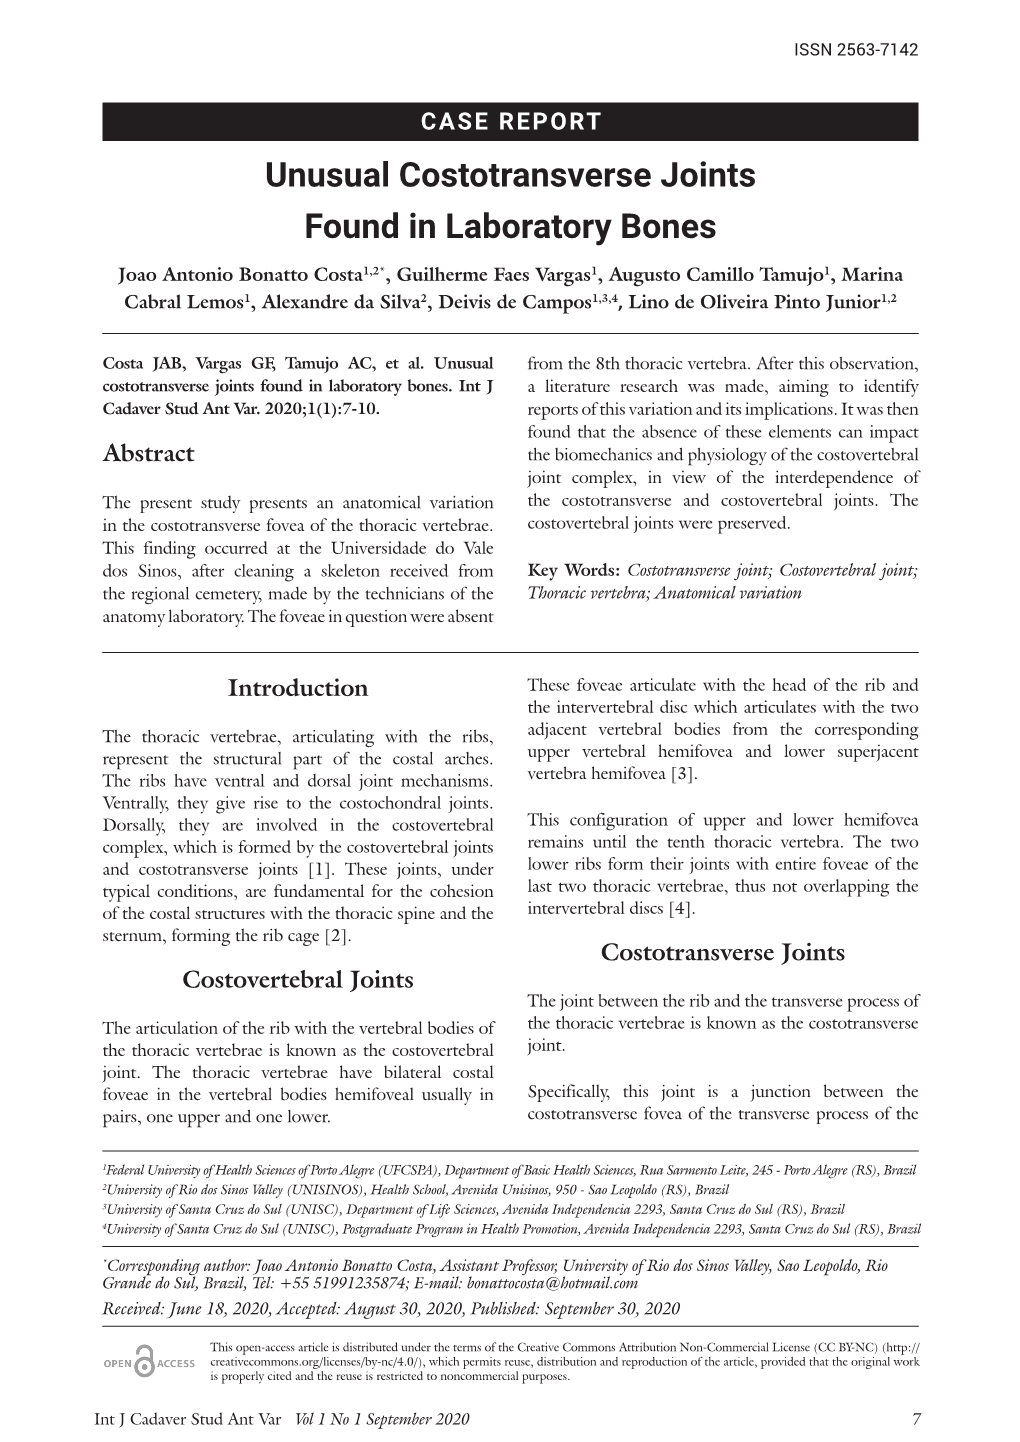 Unusual Costotransverse Joints Found in Laboratory Bones